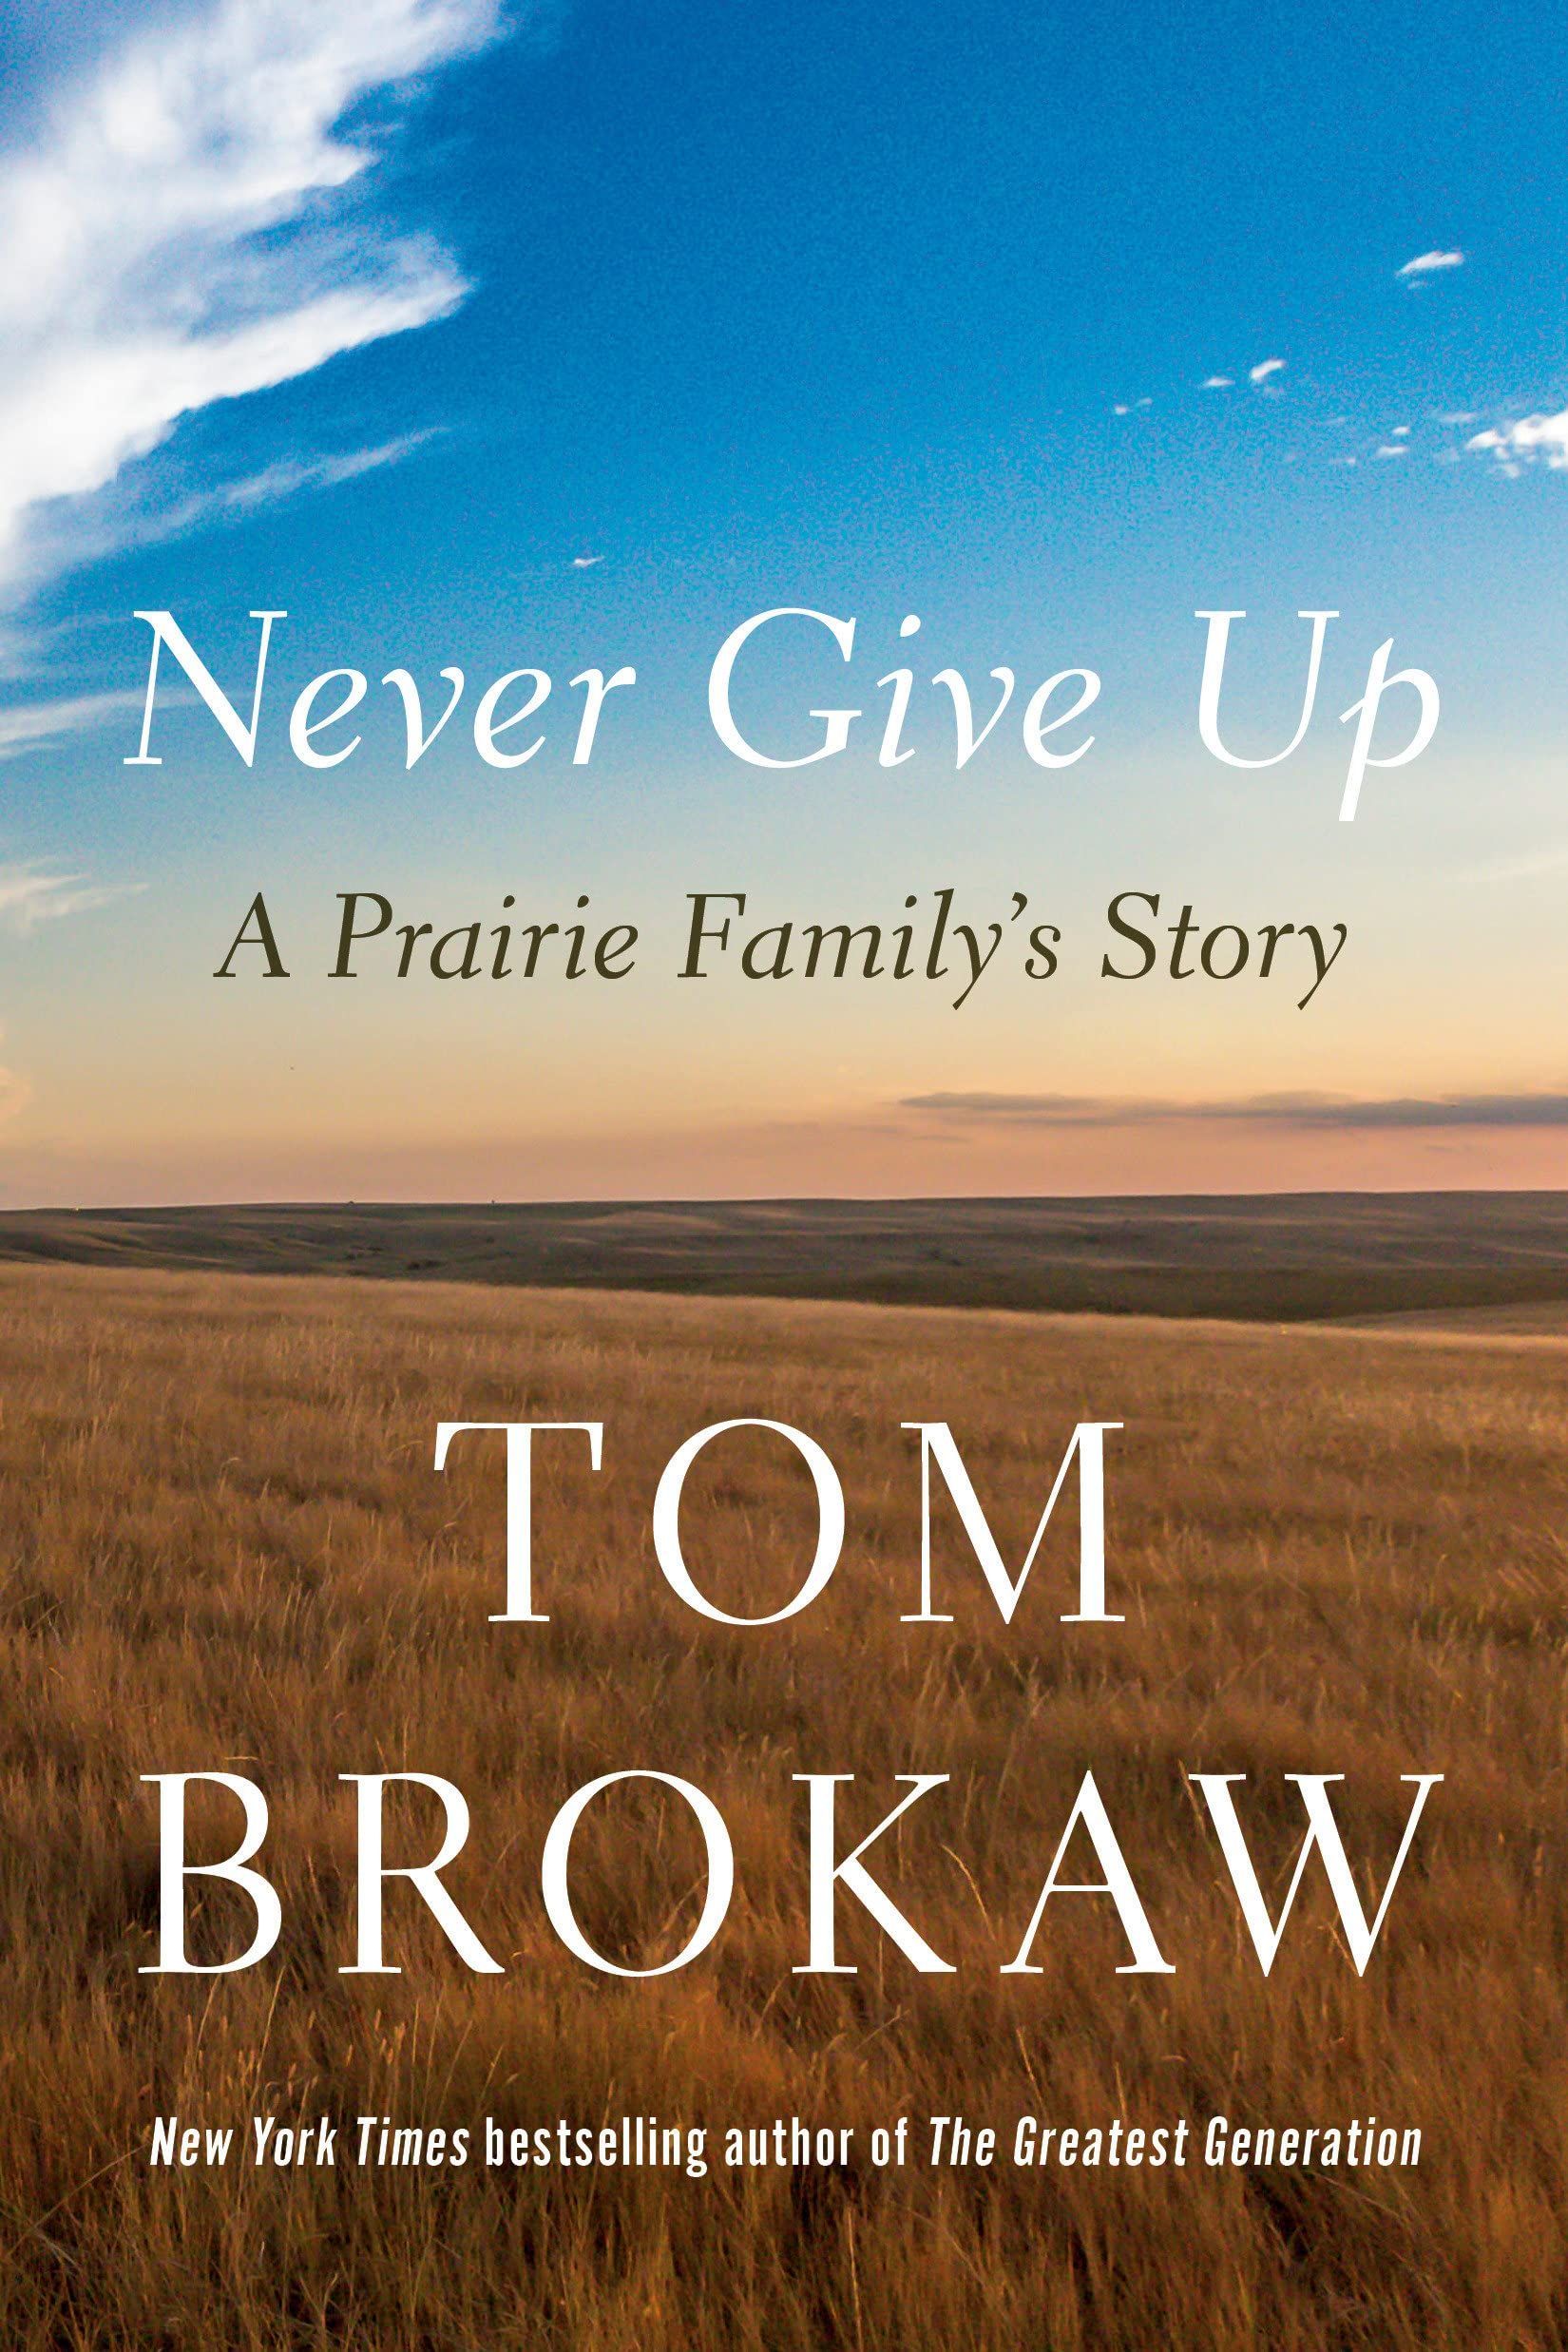 Hardworking Midwesterner: On Tom Brokaw’s “Never Give Up”